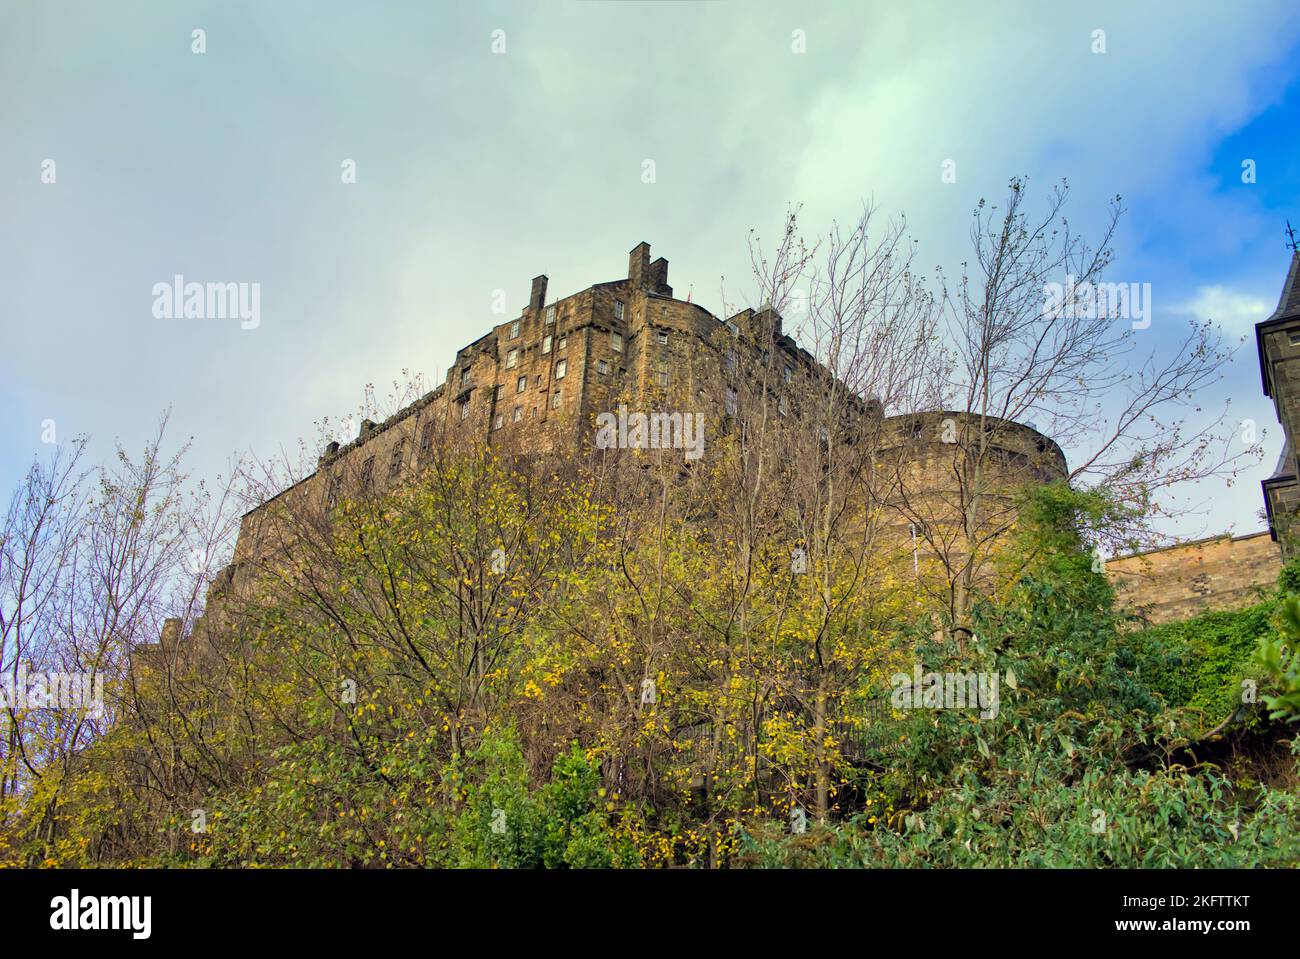 Edinburgh castle ramparts viewed from below Stock Photo